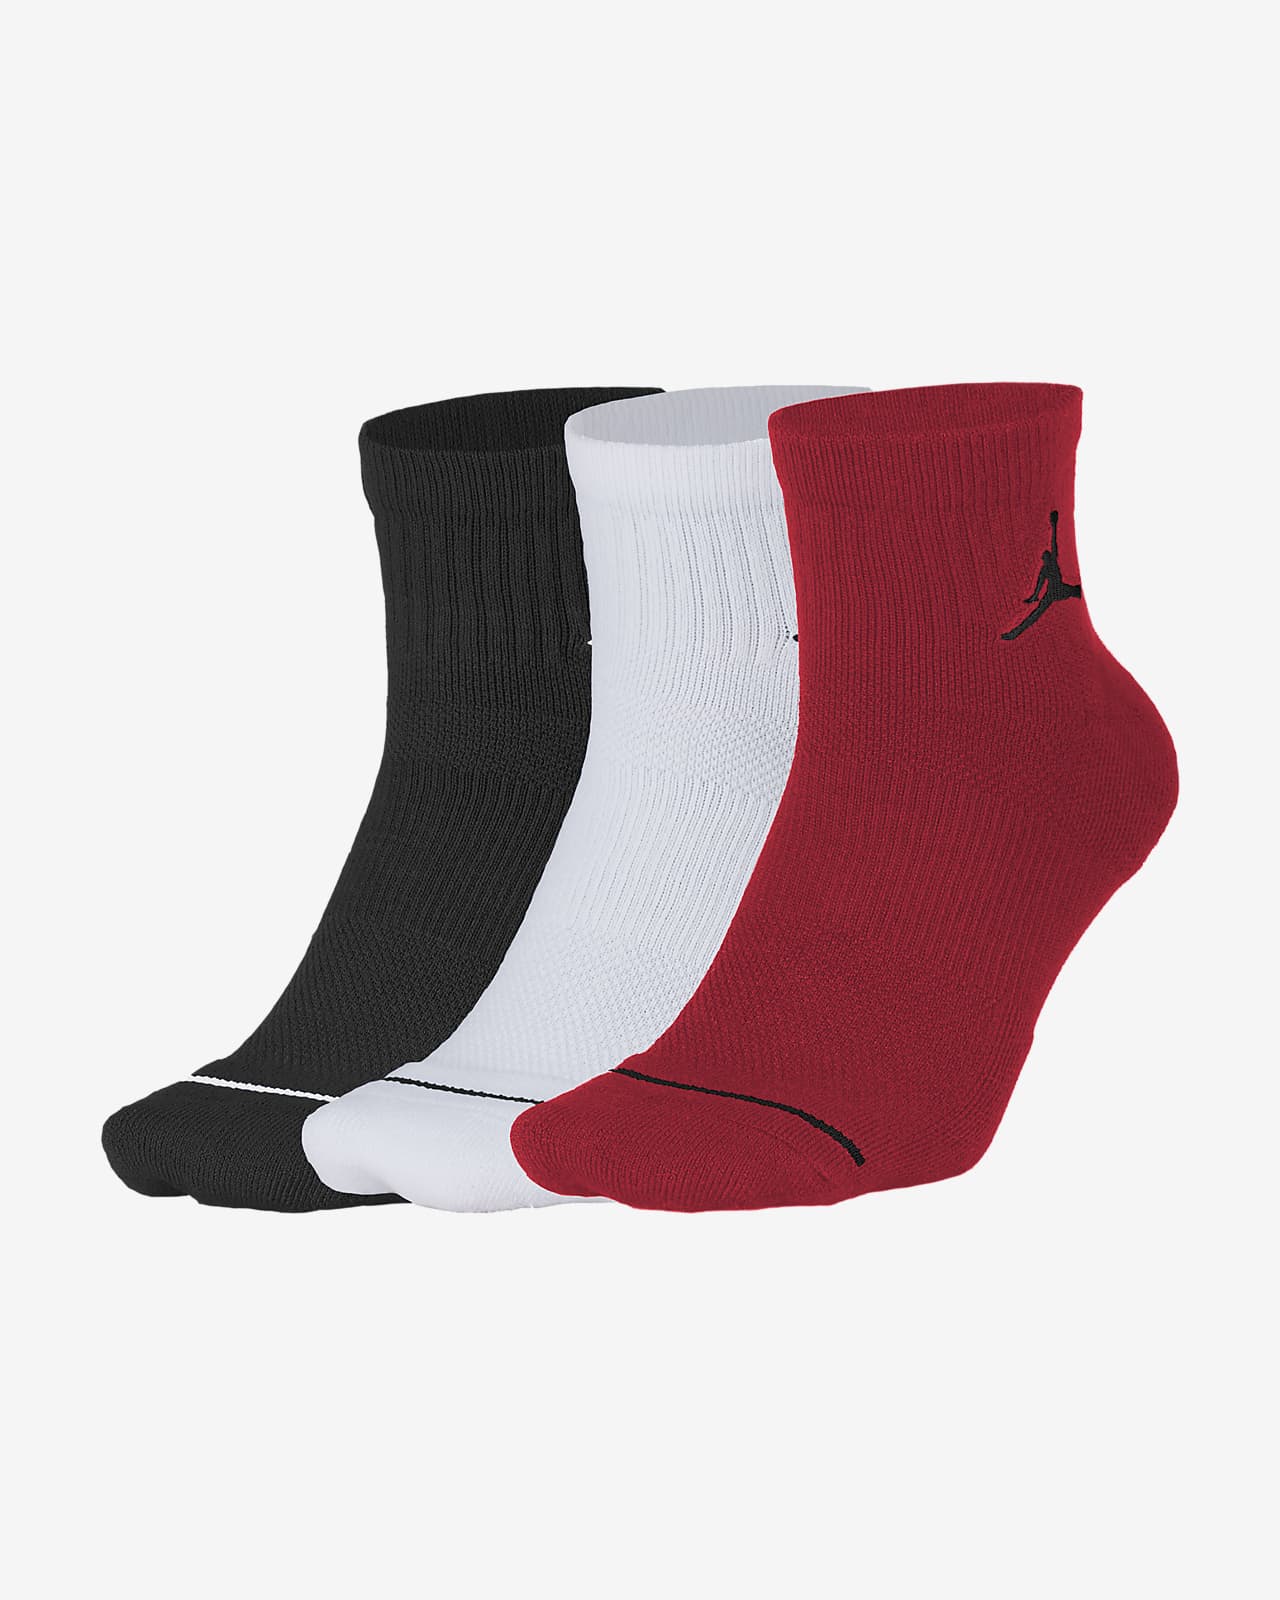 Jordan Everyday Max Ankles Socks (3 